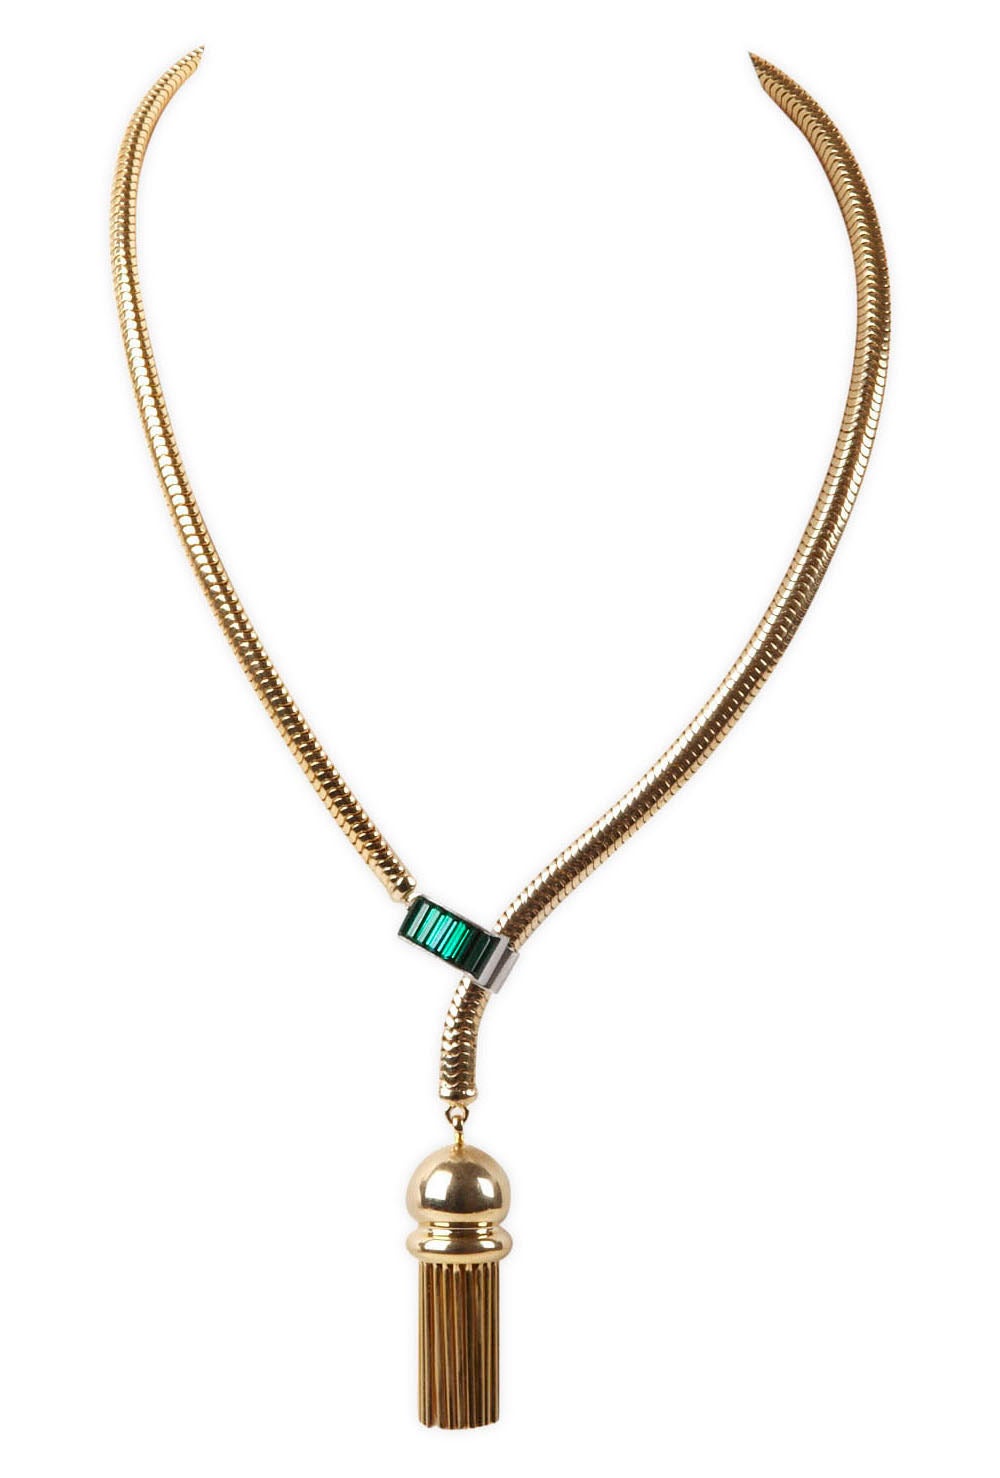 Kriesler Retro snake chain tassel necklace with adjustable clasp of emerald baguette cut stones. Gilt tassel drop. 1940's USA. 16.5